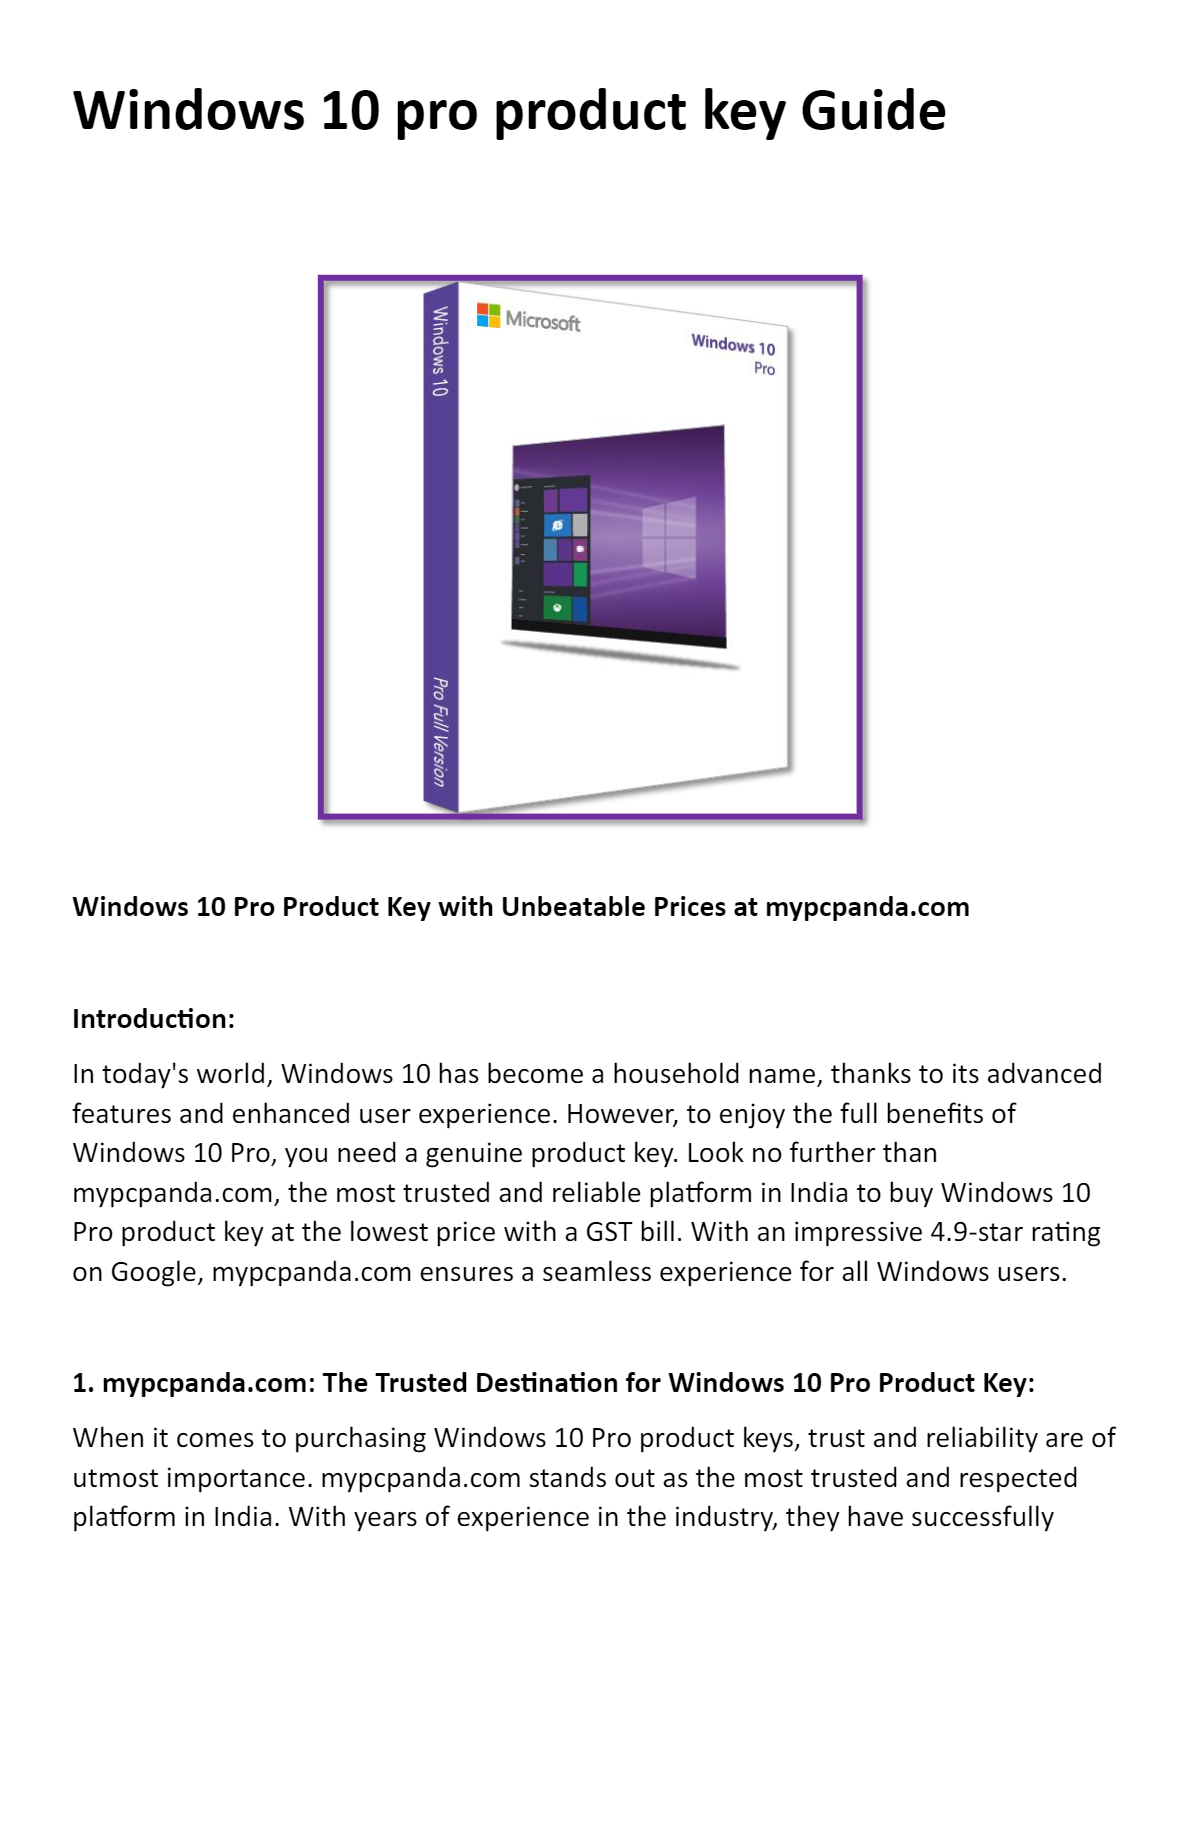 windows 10 pro lifetime activation key is available on flipkart online - Microsoft Community